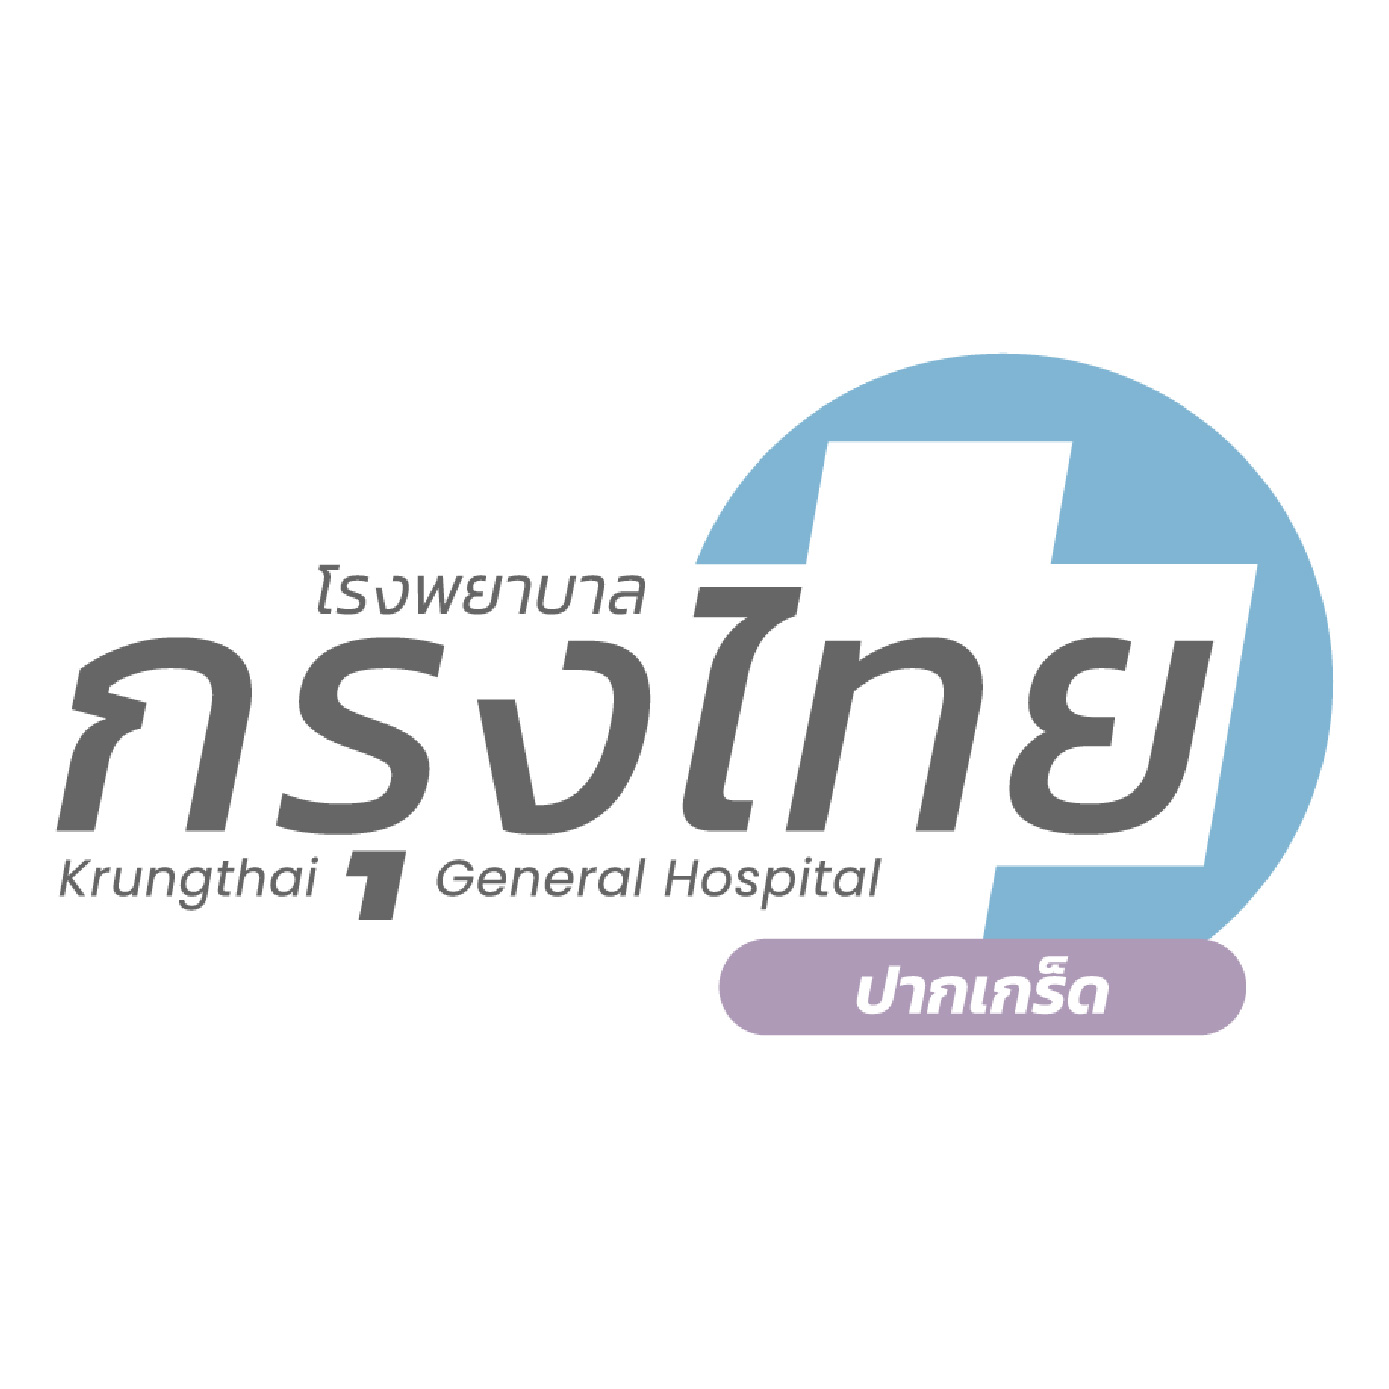 Krungthai General Hospital 01